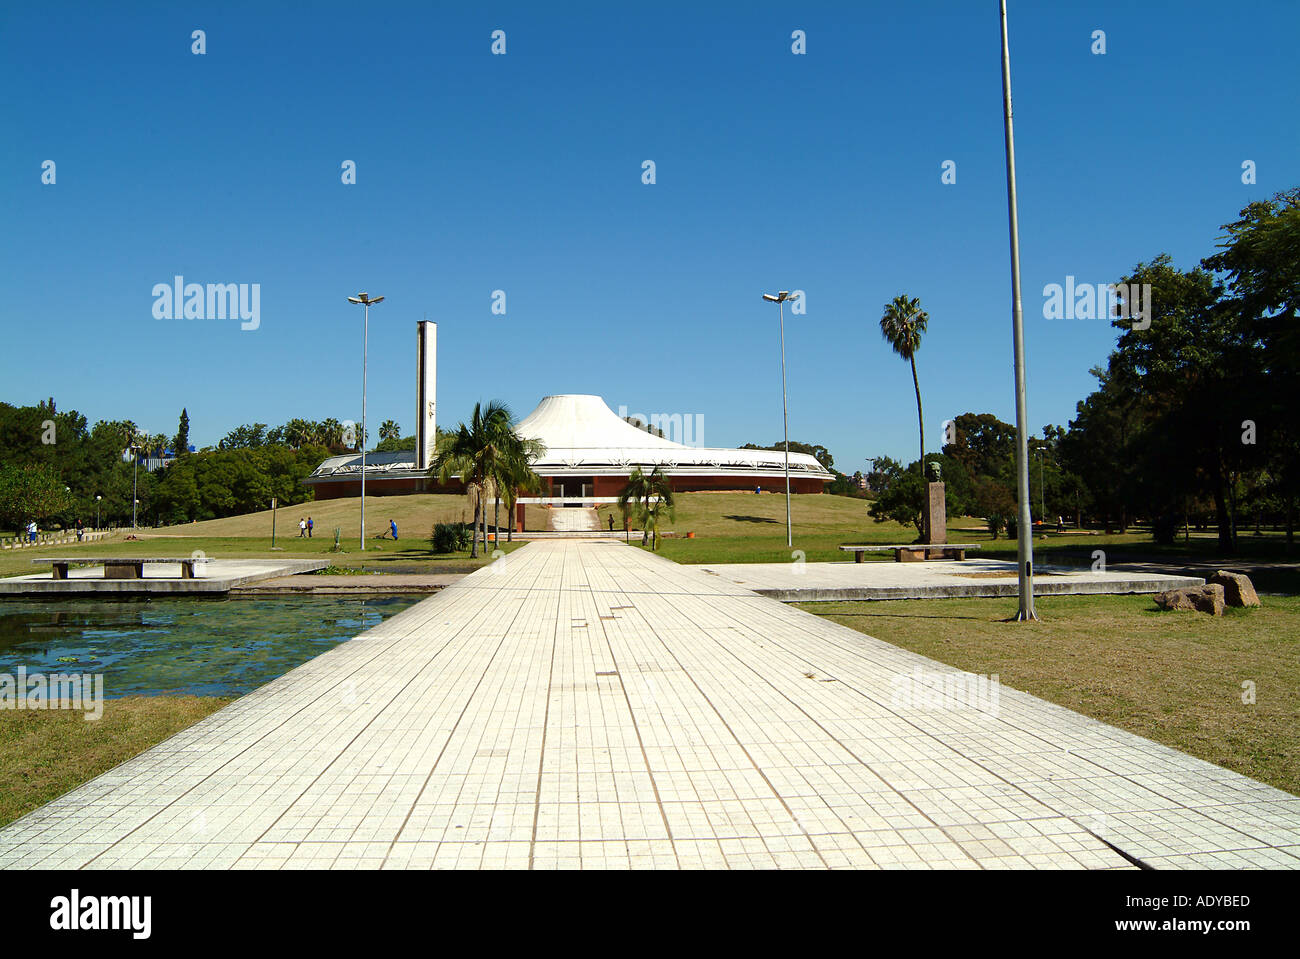 Rio Grande tun Sul Amphitheater Palm Bäume Araujo Vianna Auditorium öffentlichen Raum blauer Himmel Eingang Zugang Rasen Park Farroupilha p Stockfoto